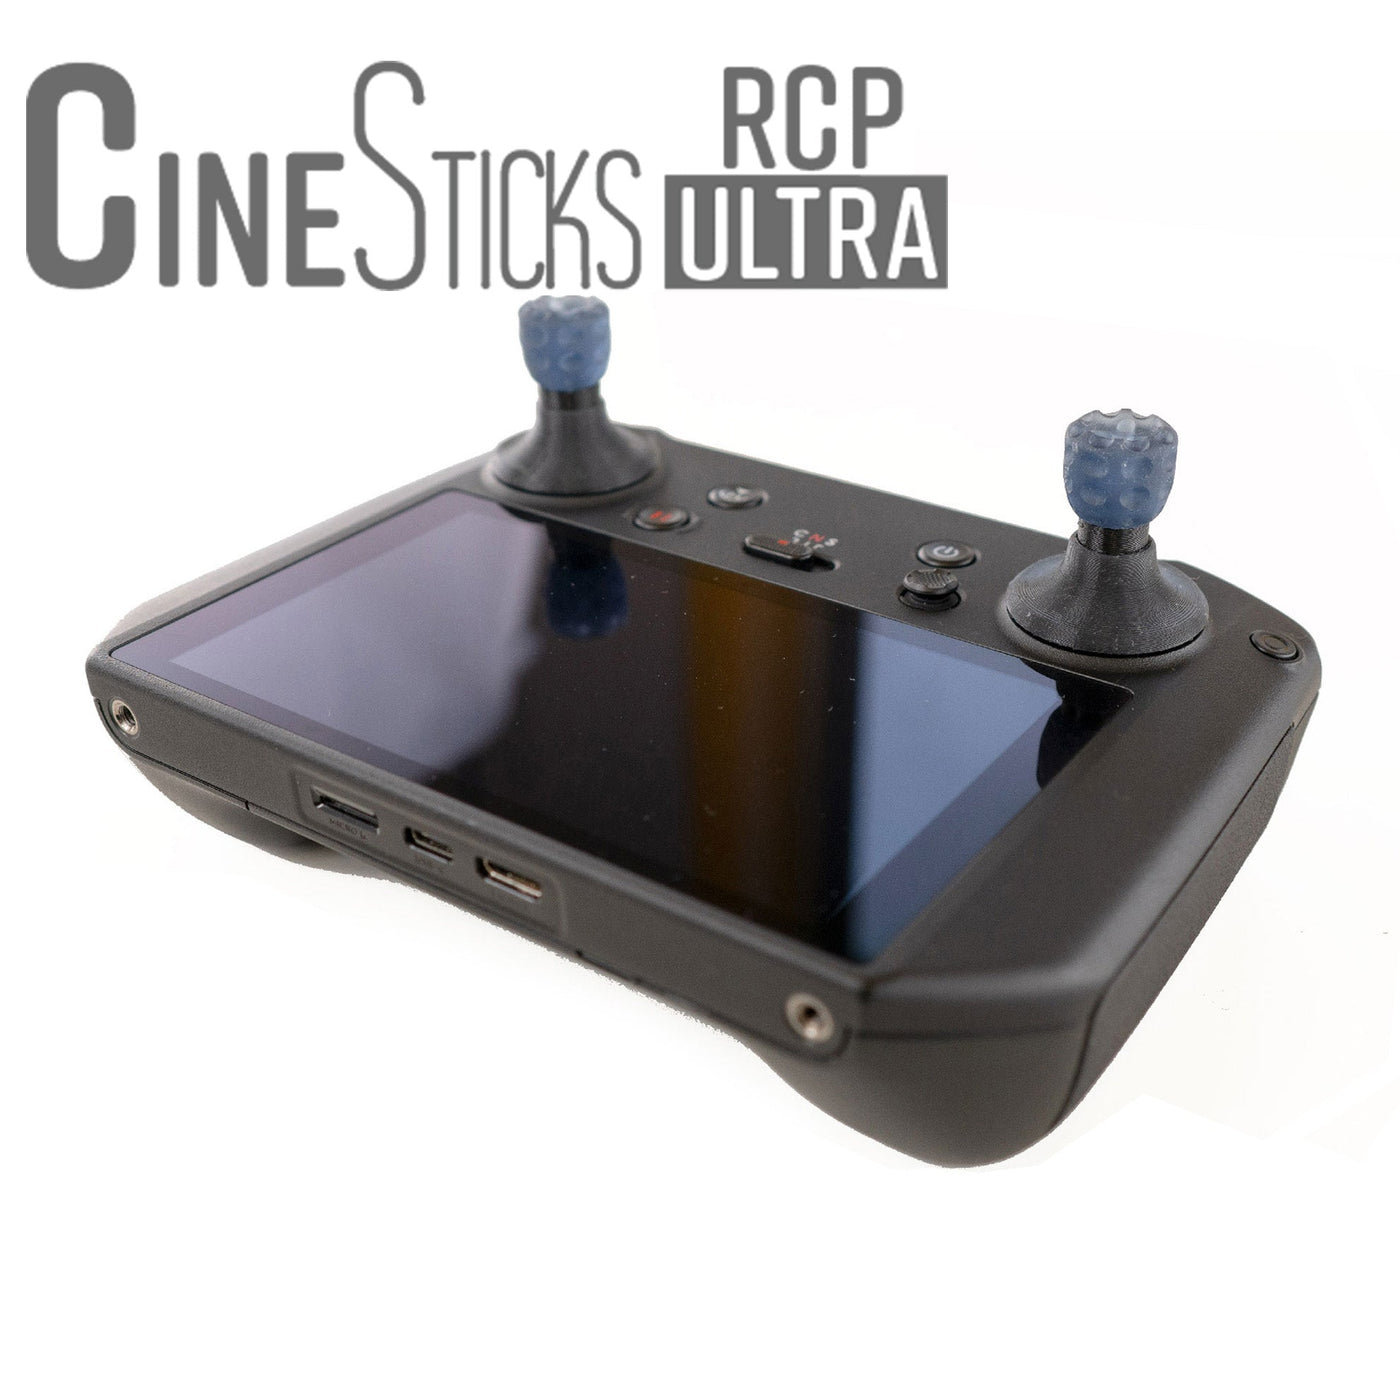 CineSticks RCP Ultra - UK